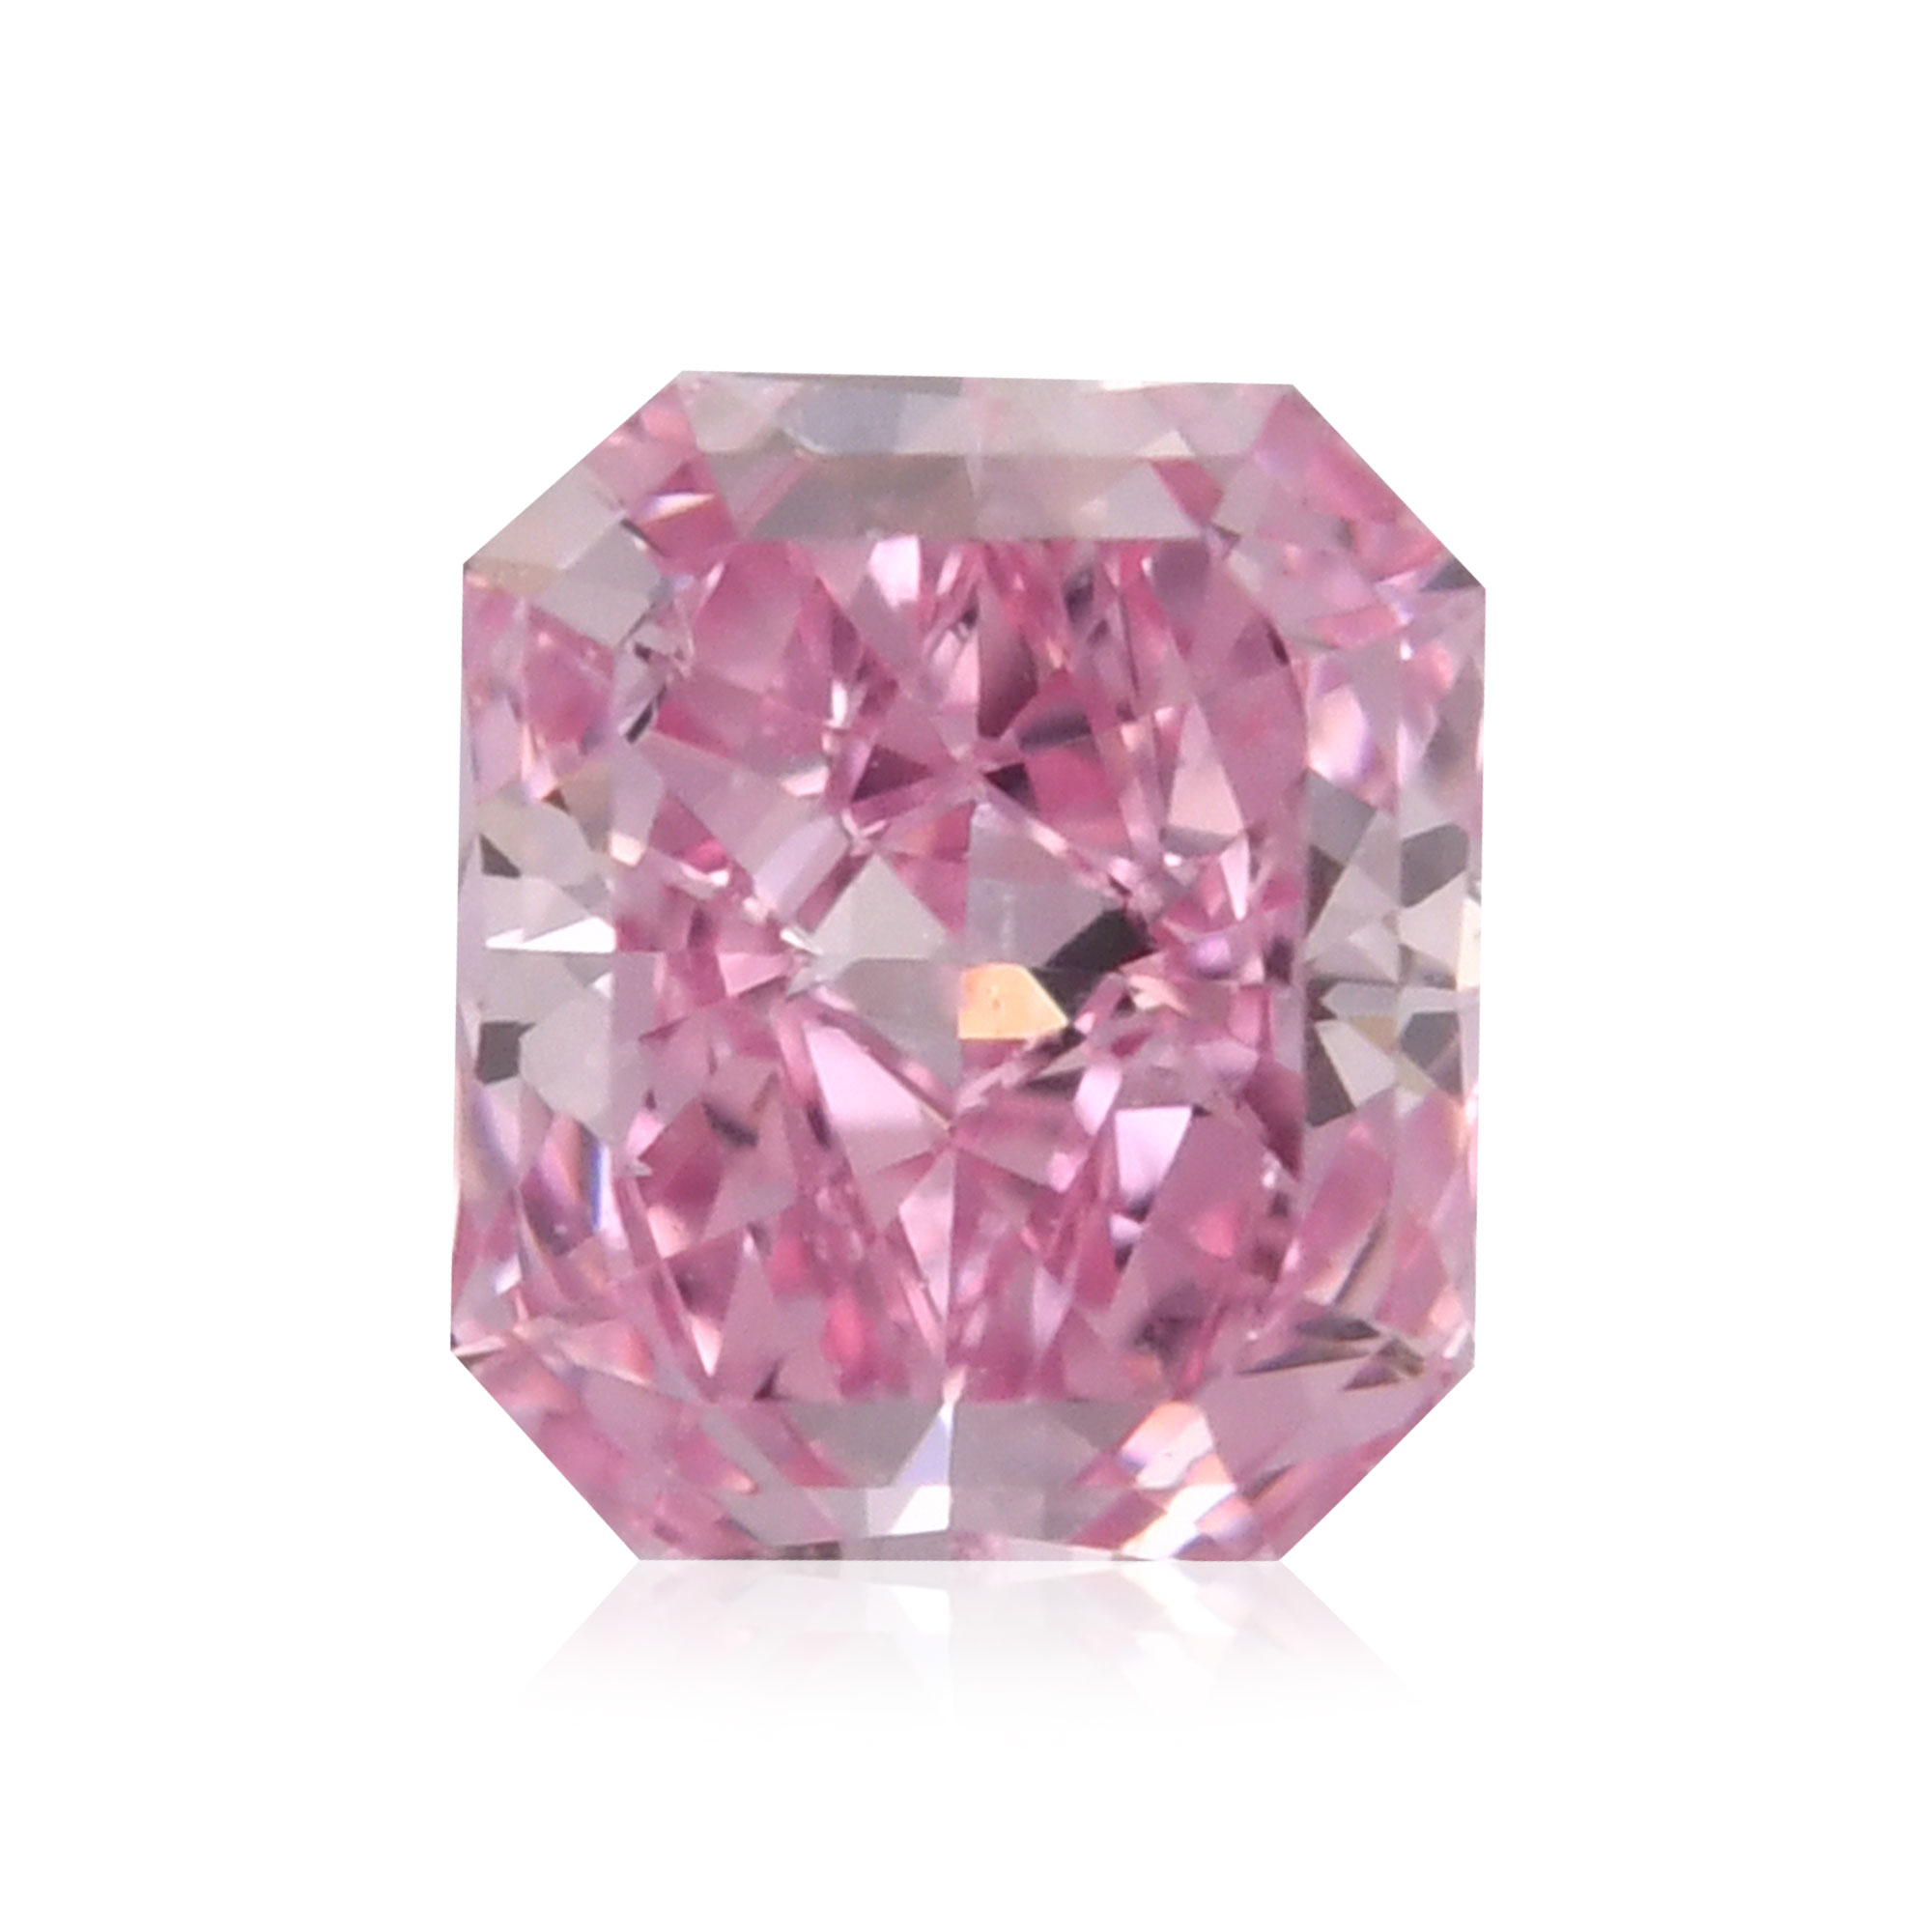 0.22 carat, Fancy Vivid Purple Pink Diamond, Radiant Shape, SI1 Clarity,  GIA, SKU 529778